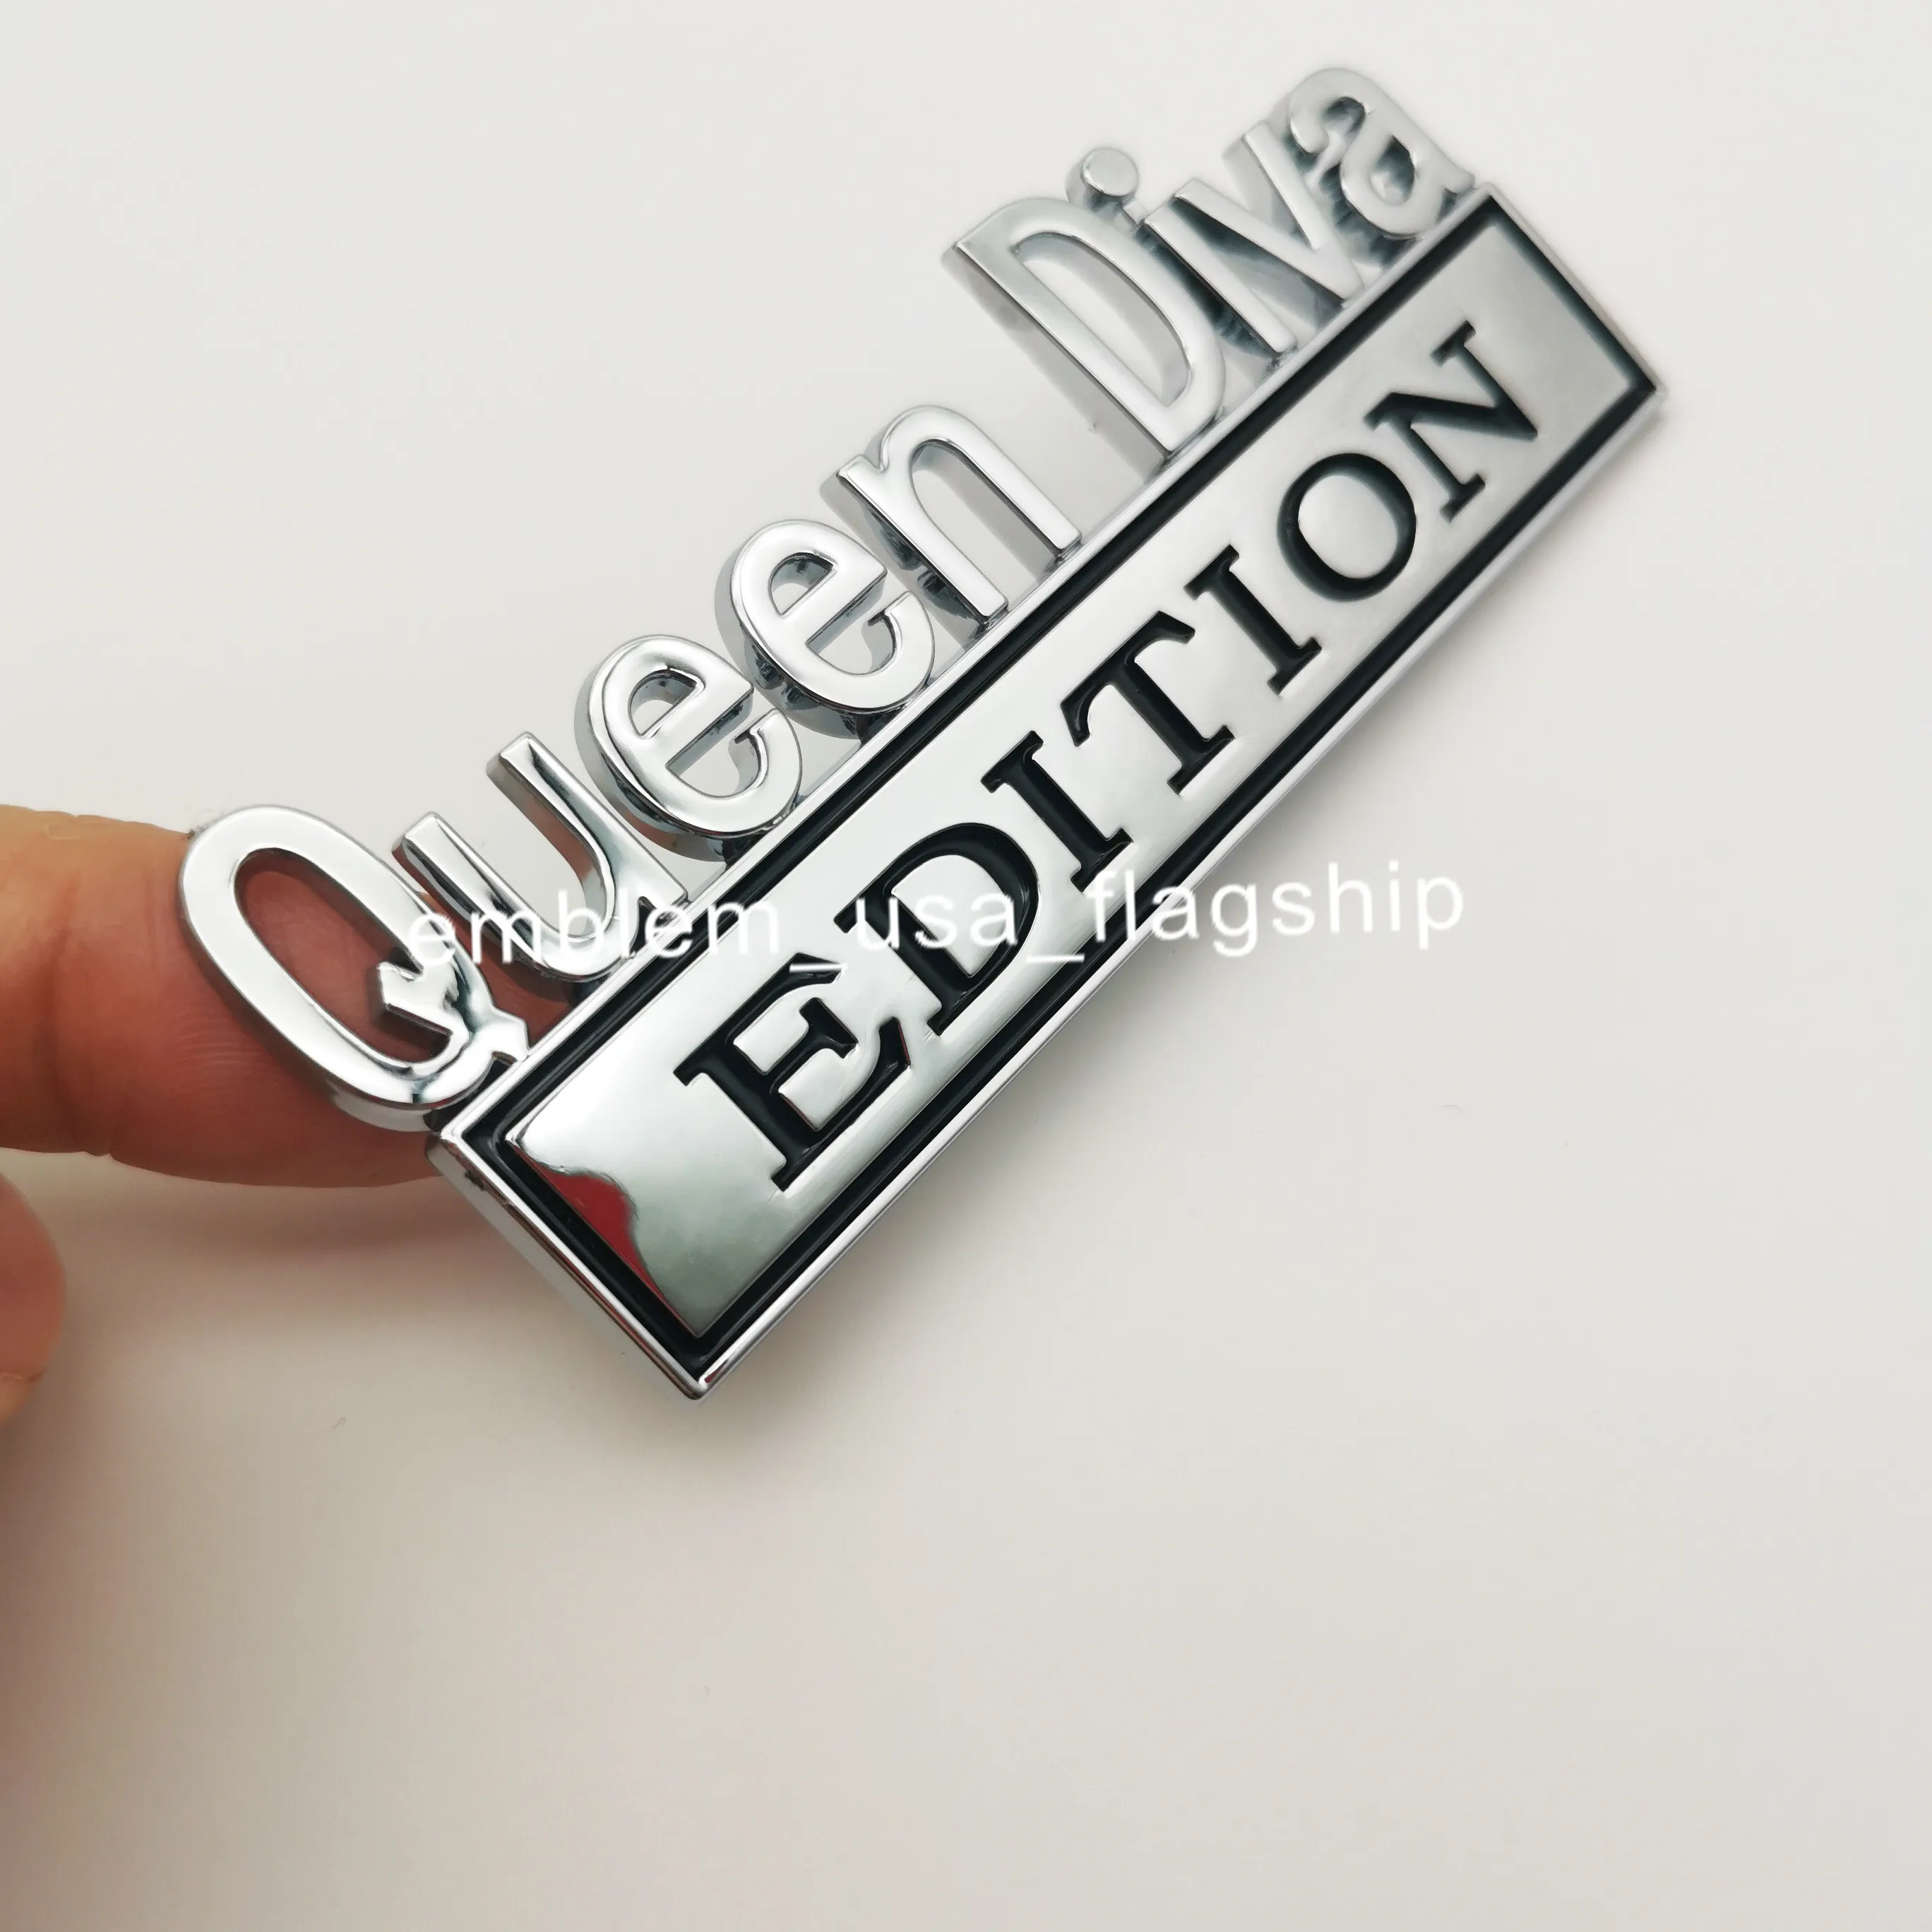 Naklejka samochodowa Queen Diva Edition White Trash Emblem 3D Fender Badge for Universal Cars Truck